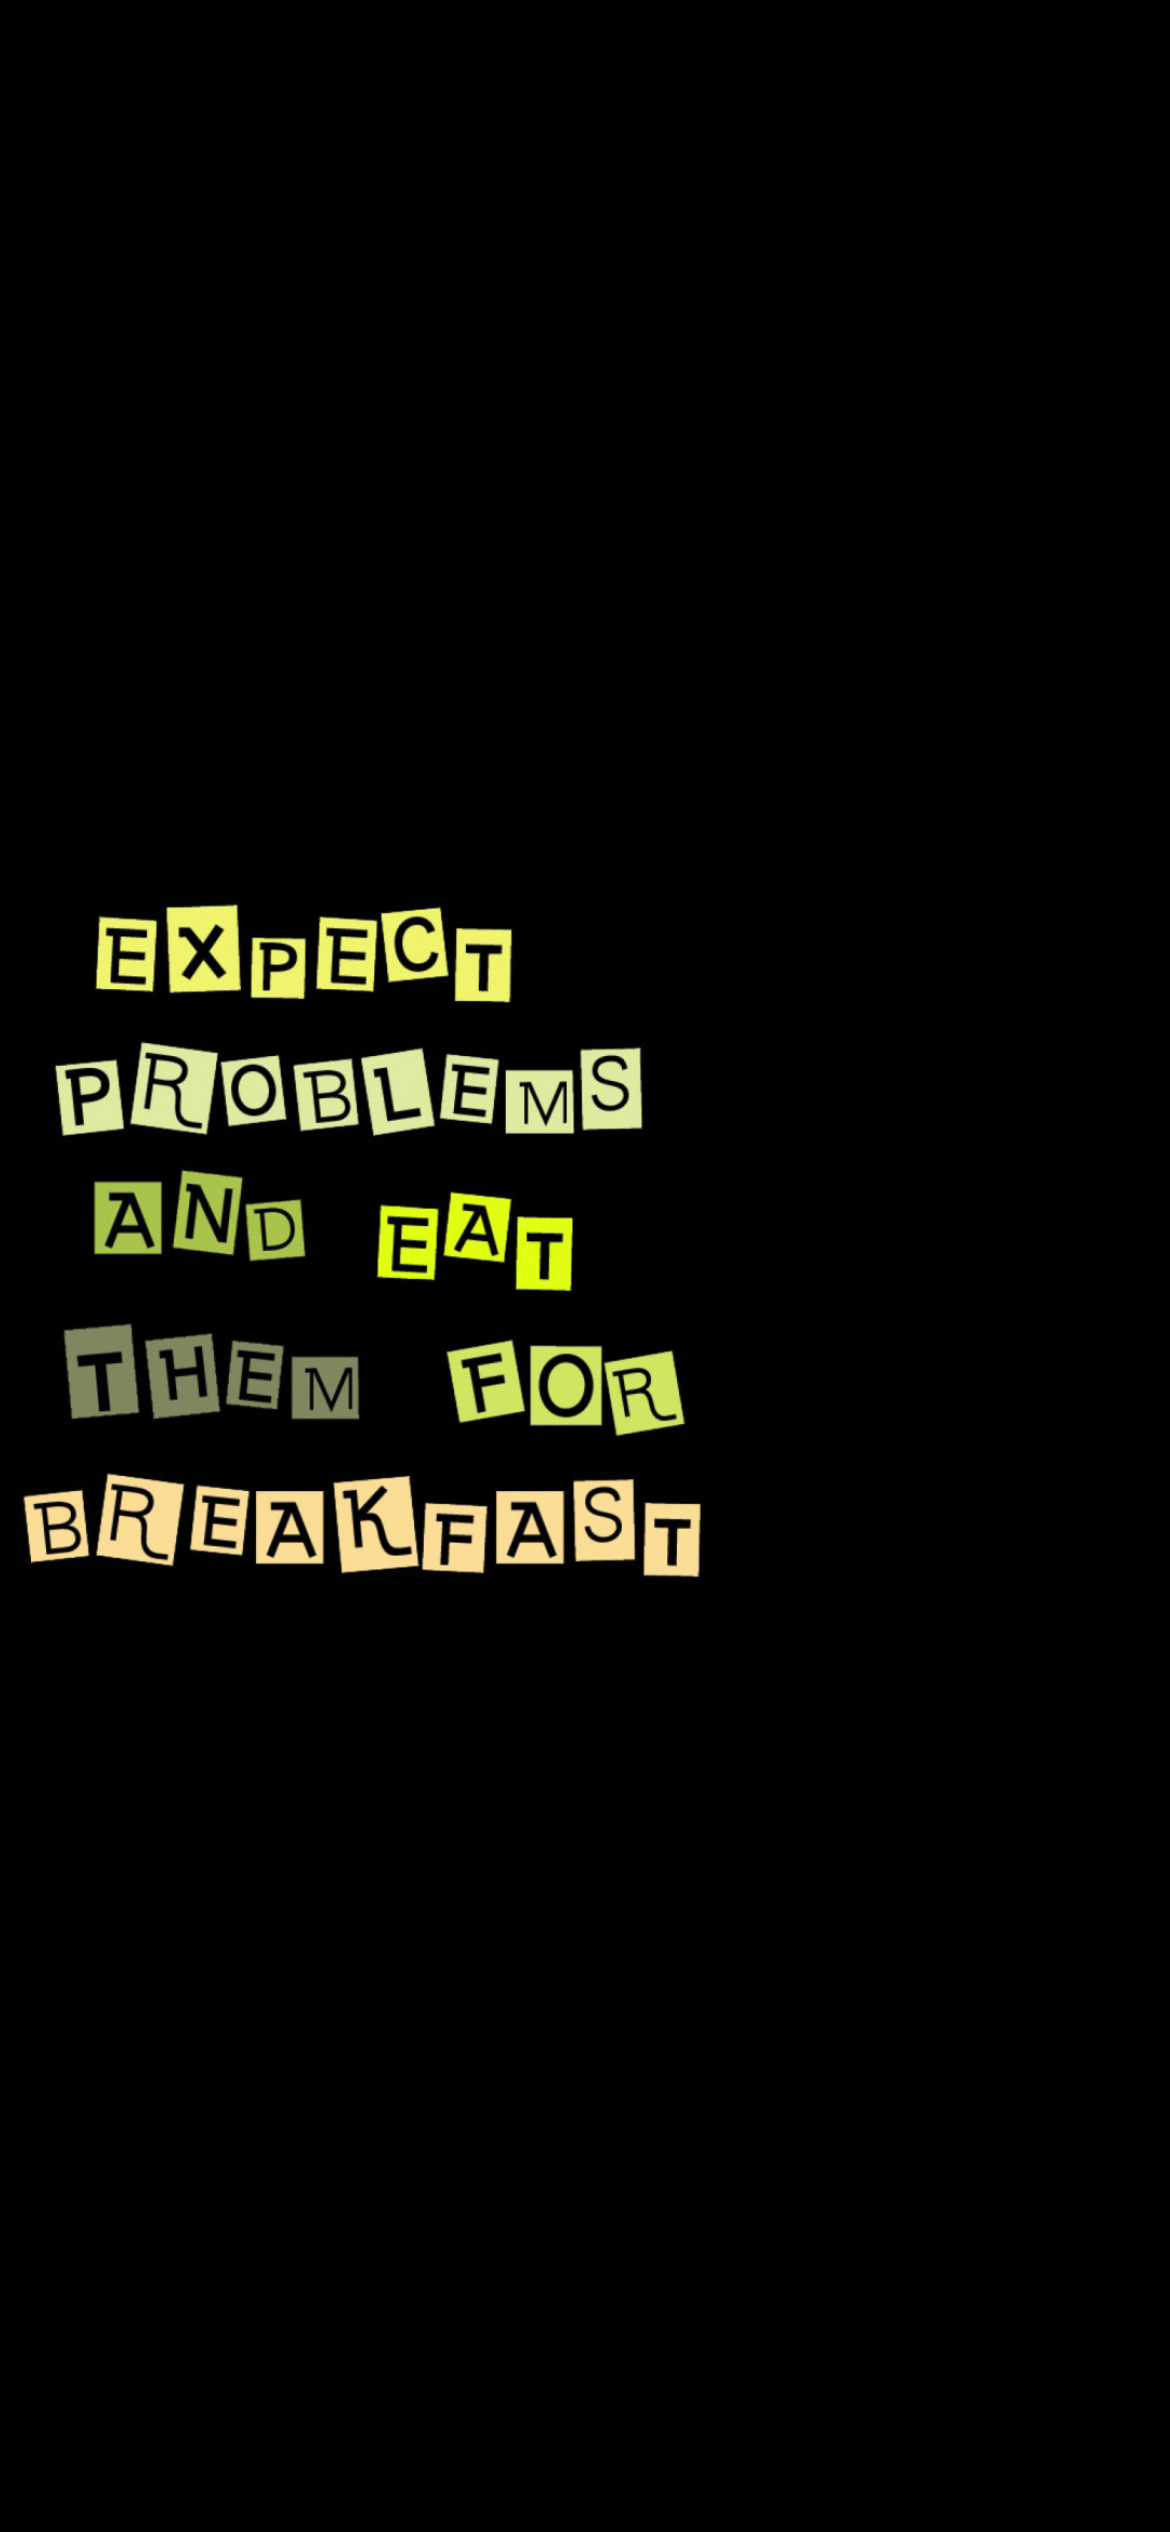 Problems For Breakfast screenshot #1 1170x2532